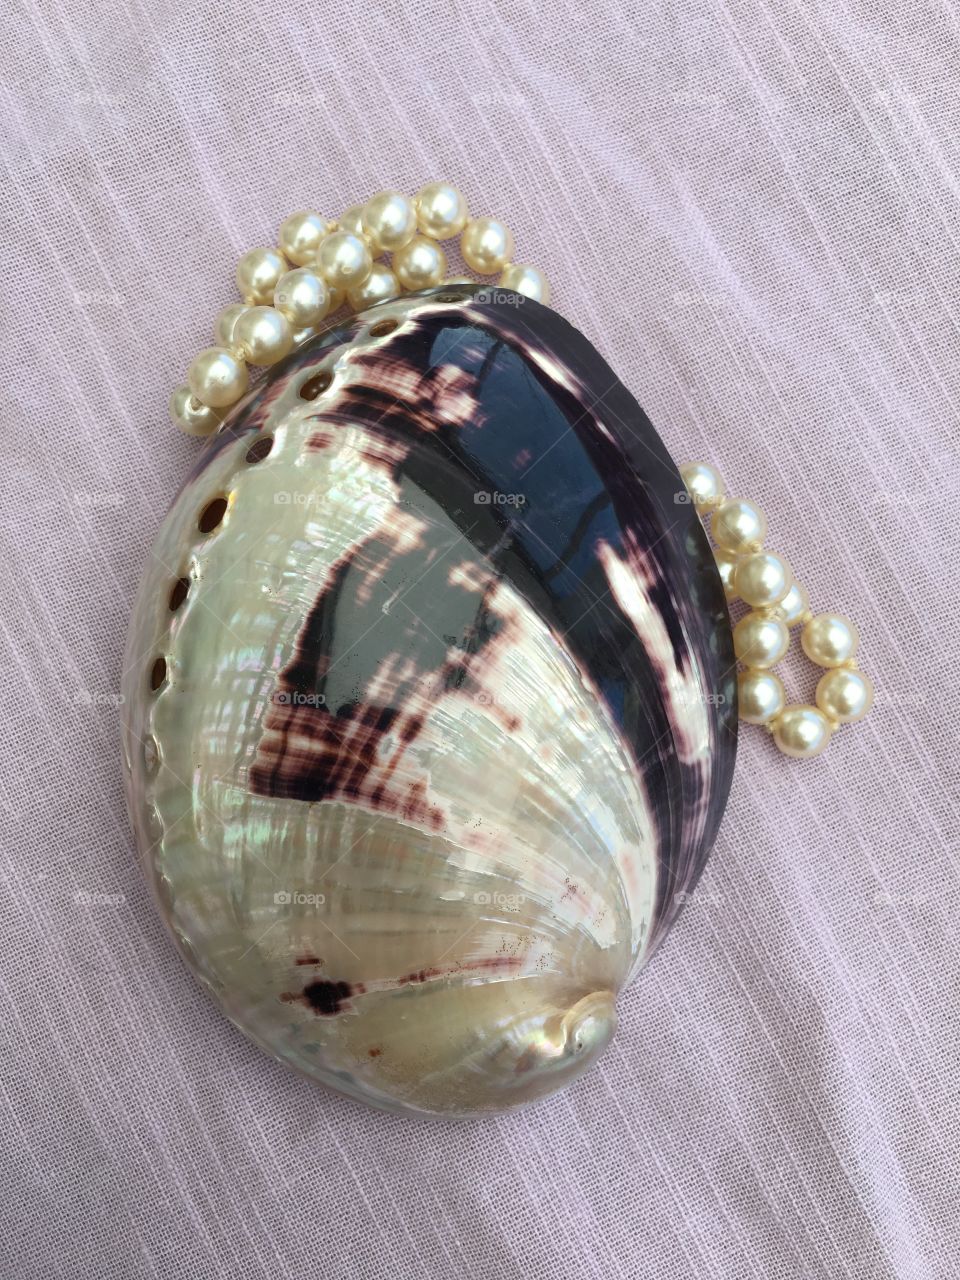 Shell snd pearls